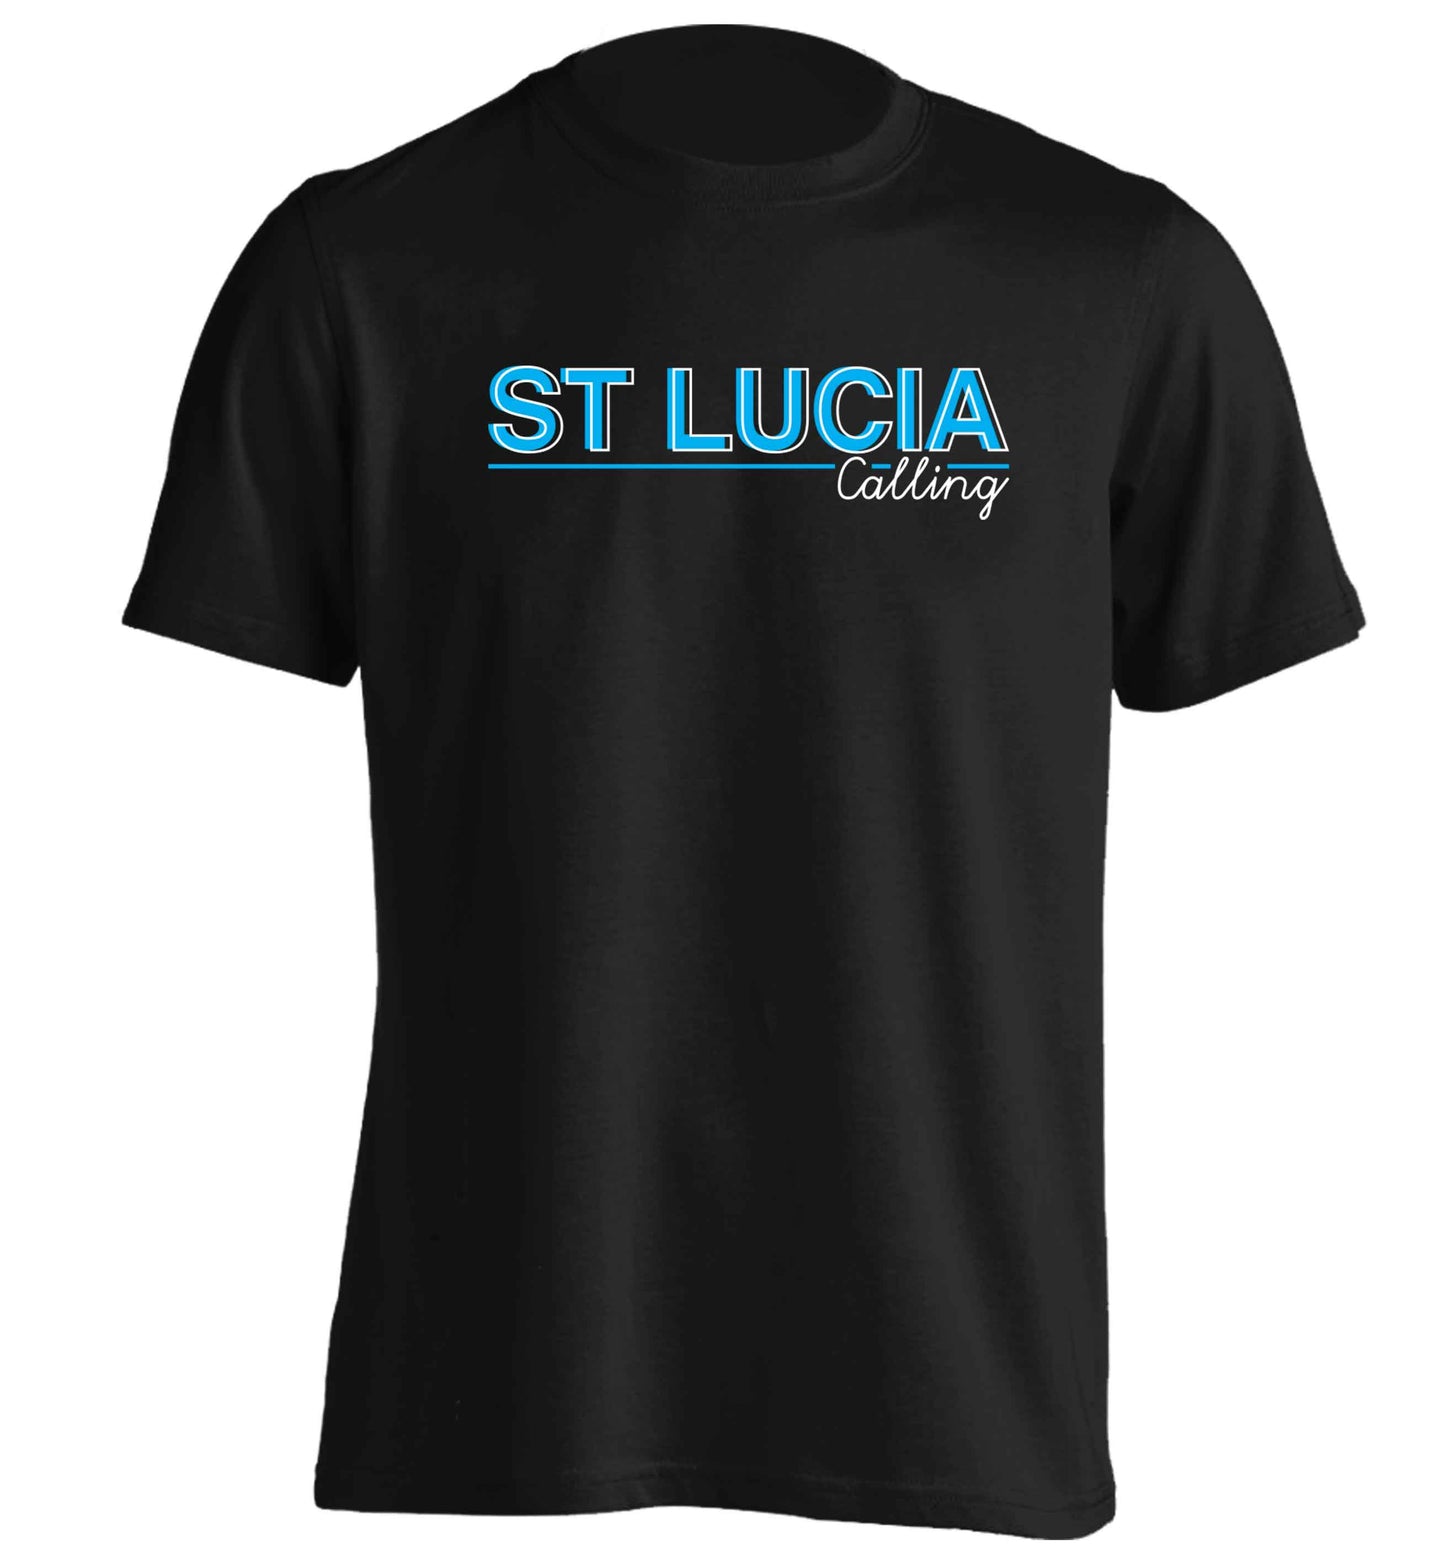 St Lucia calling adults unisex black Tshirt 2XL